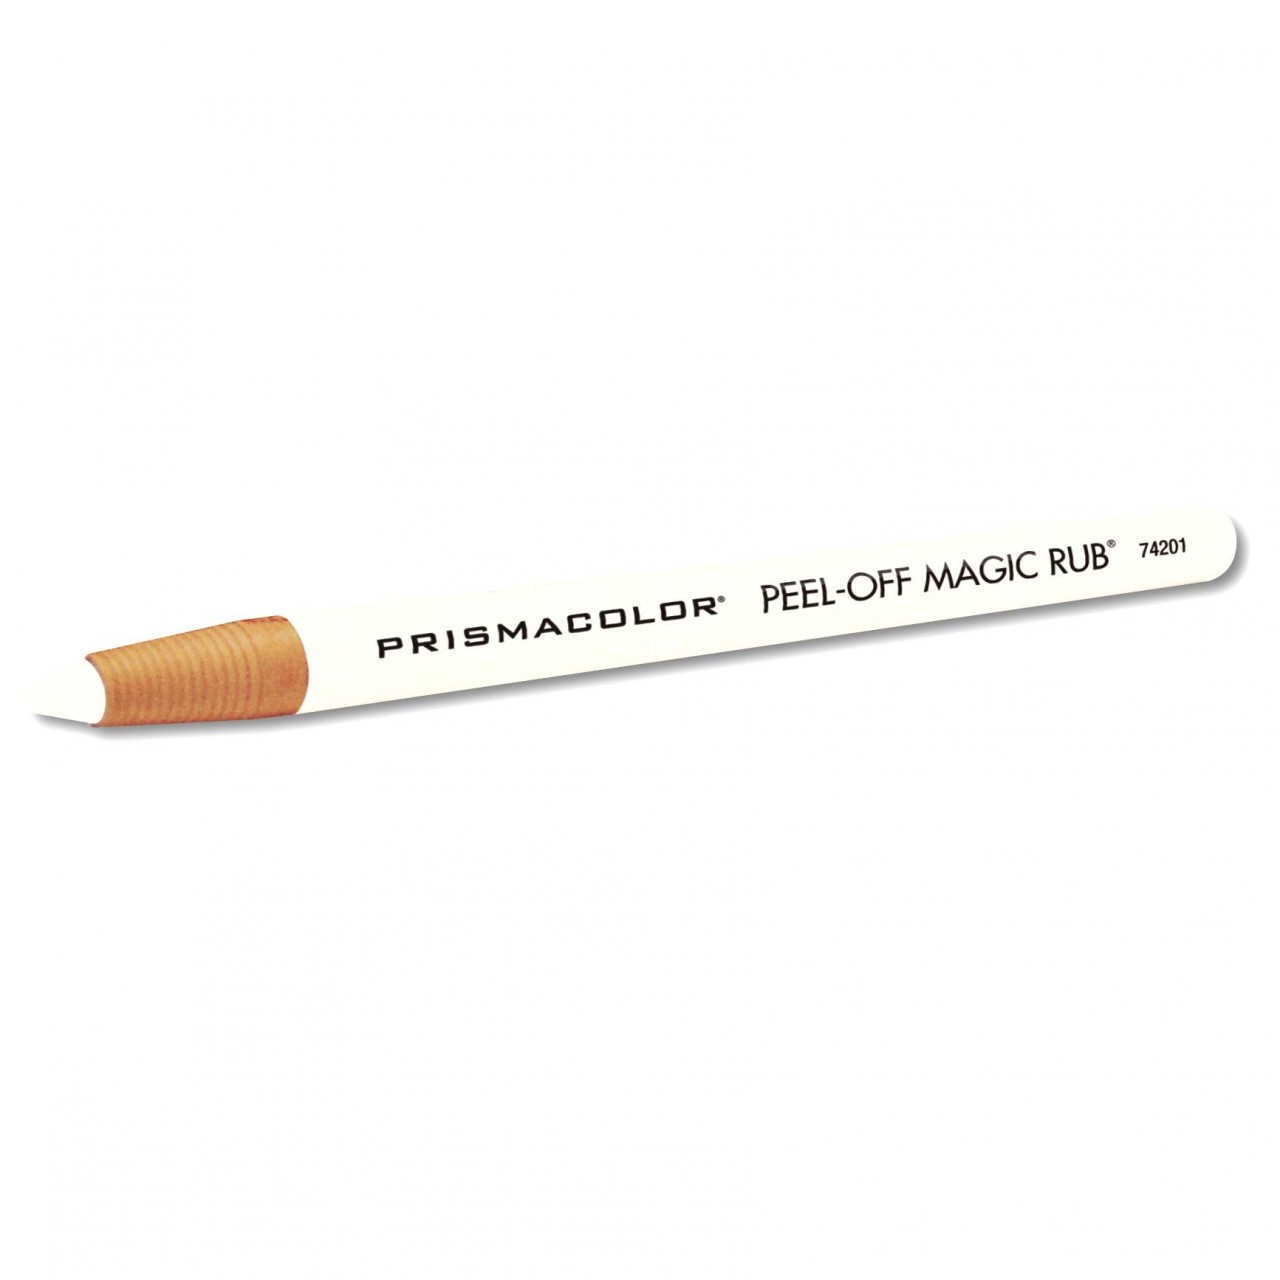 Prismacolor Magic Rub Eraser